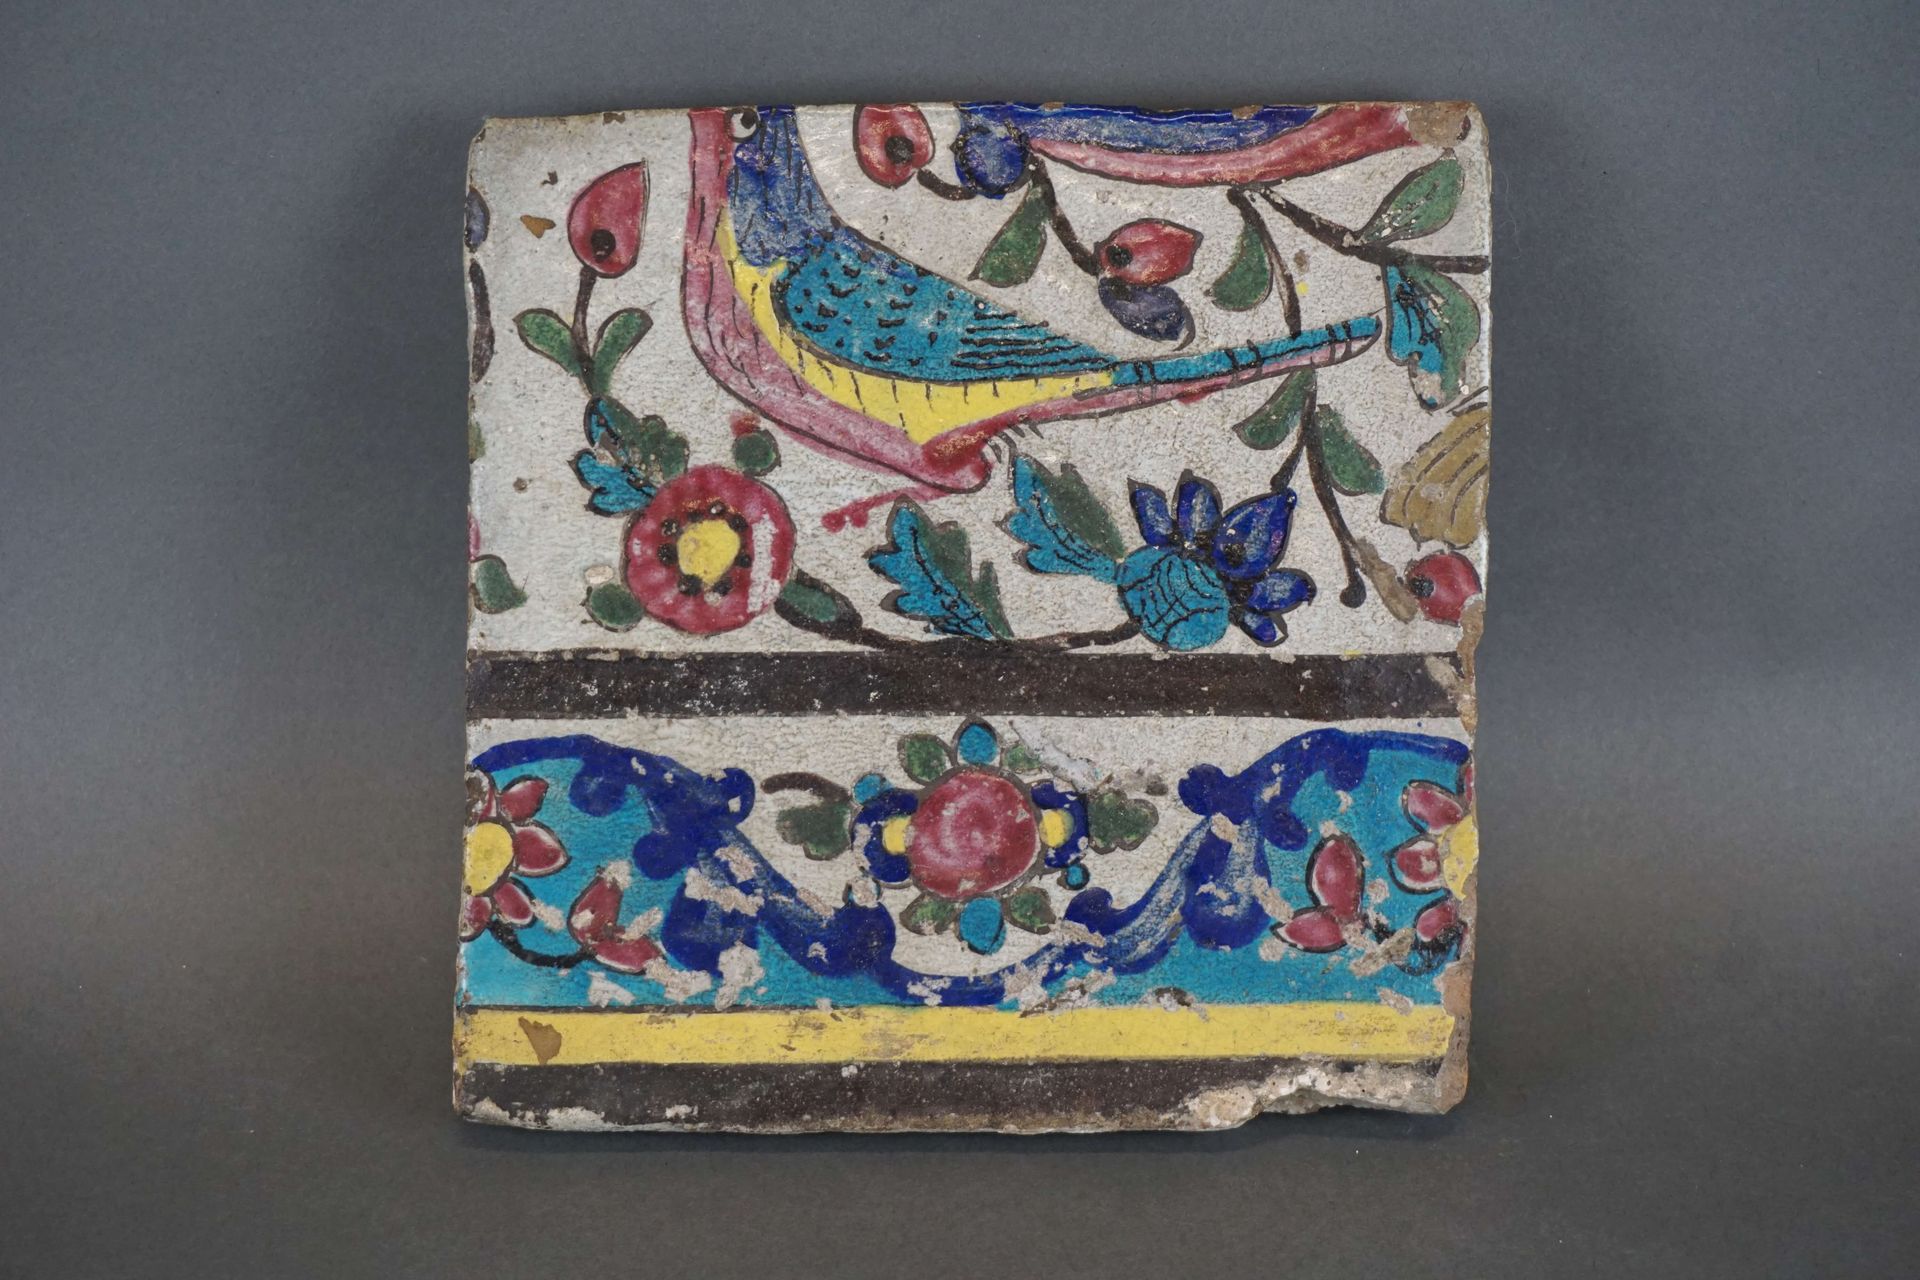 Null Iran. Polychrome ceramic tile. Accidents. 20x20 cm